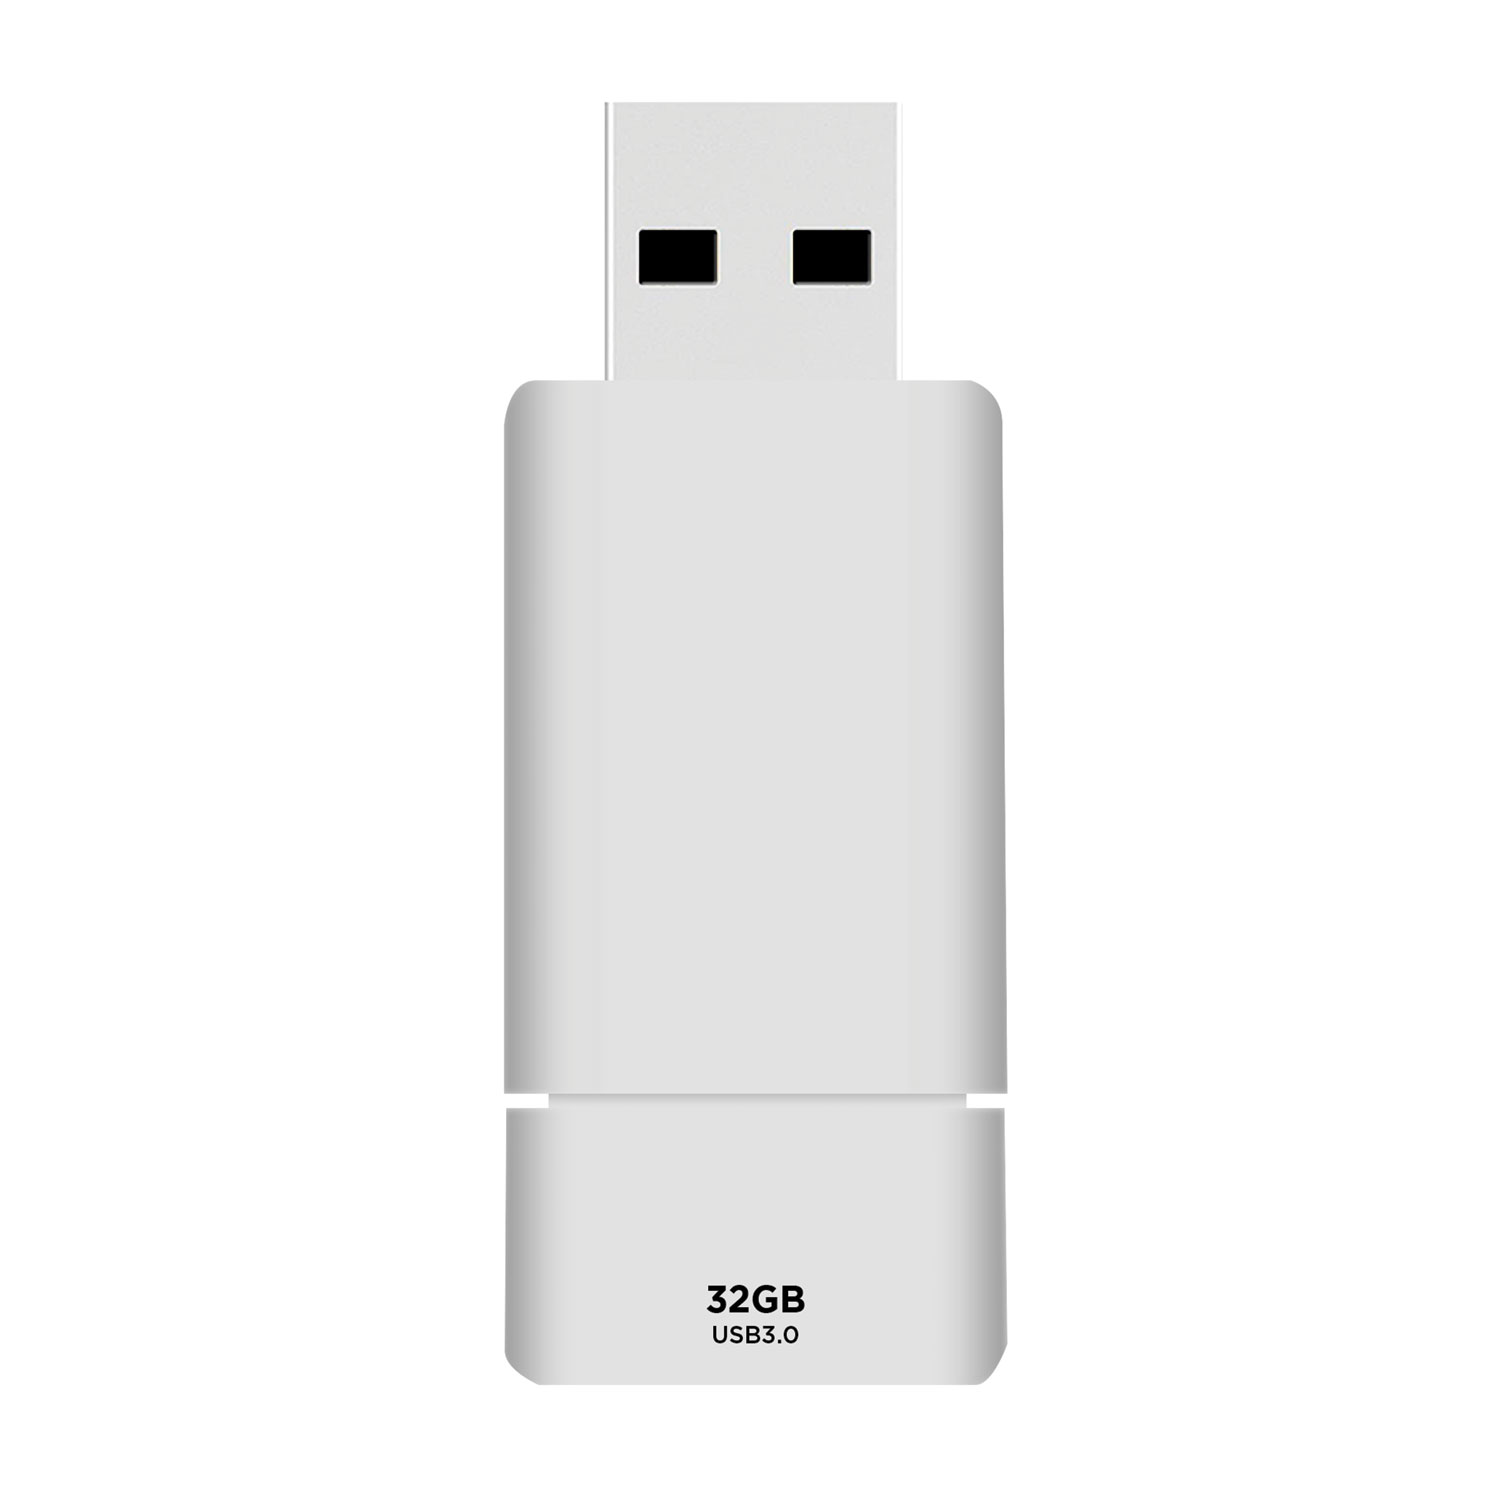  Gigastone TE-U332GB-R USB 3.0 Flash Drive, 32 GB, Assorted Color (GGS24387004) 